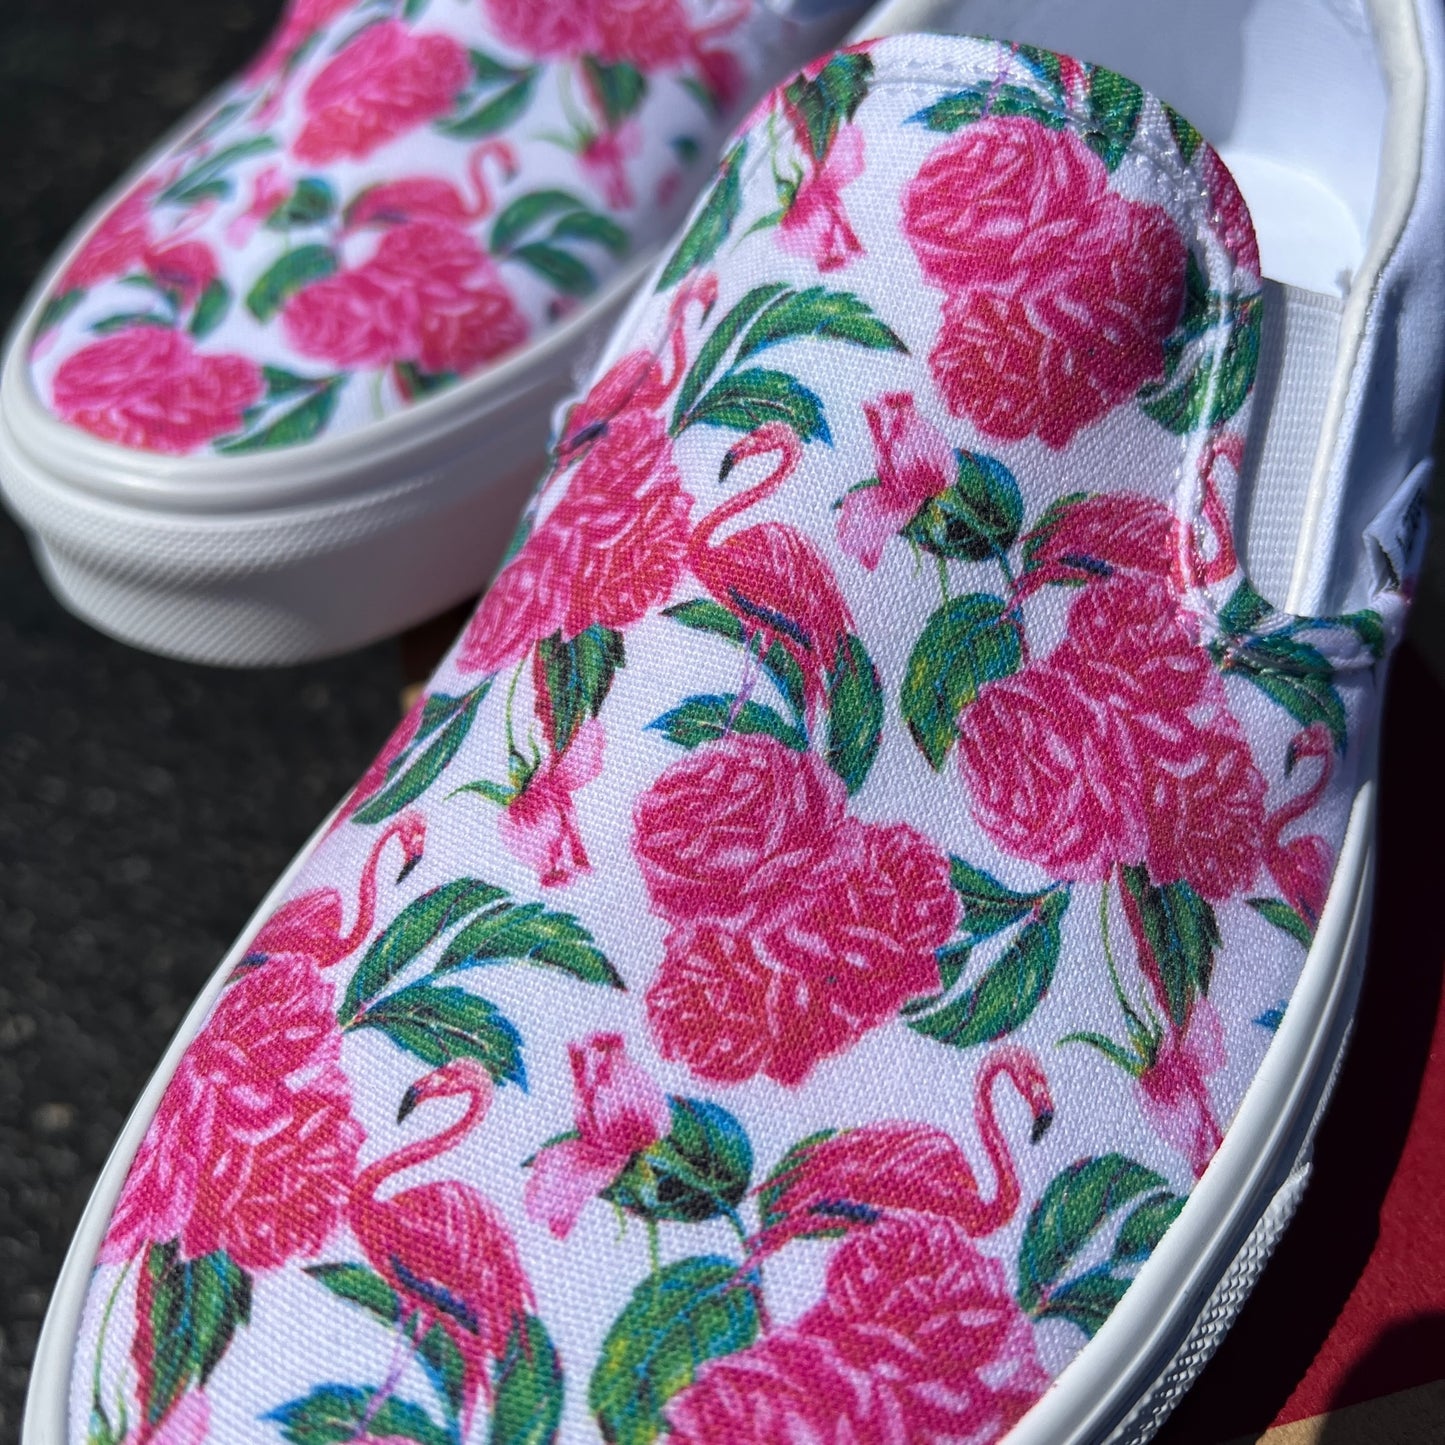 Hot Pink Flamingos and Roses - Custom Vans White Slip On Shoes